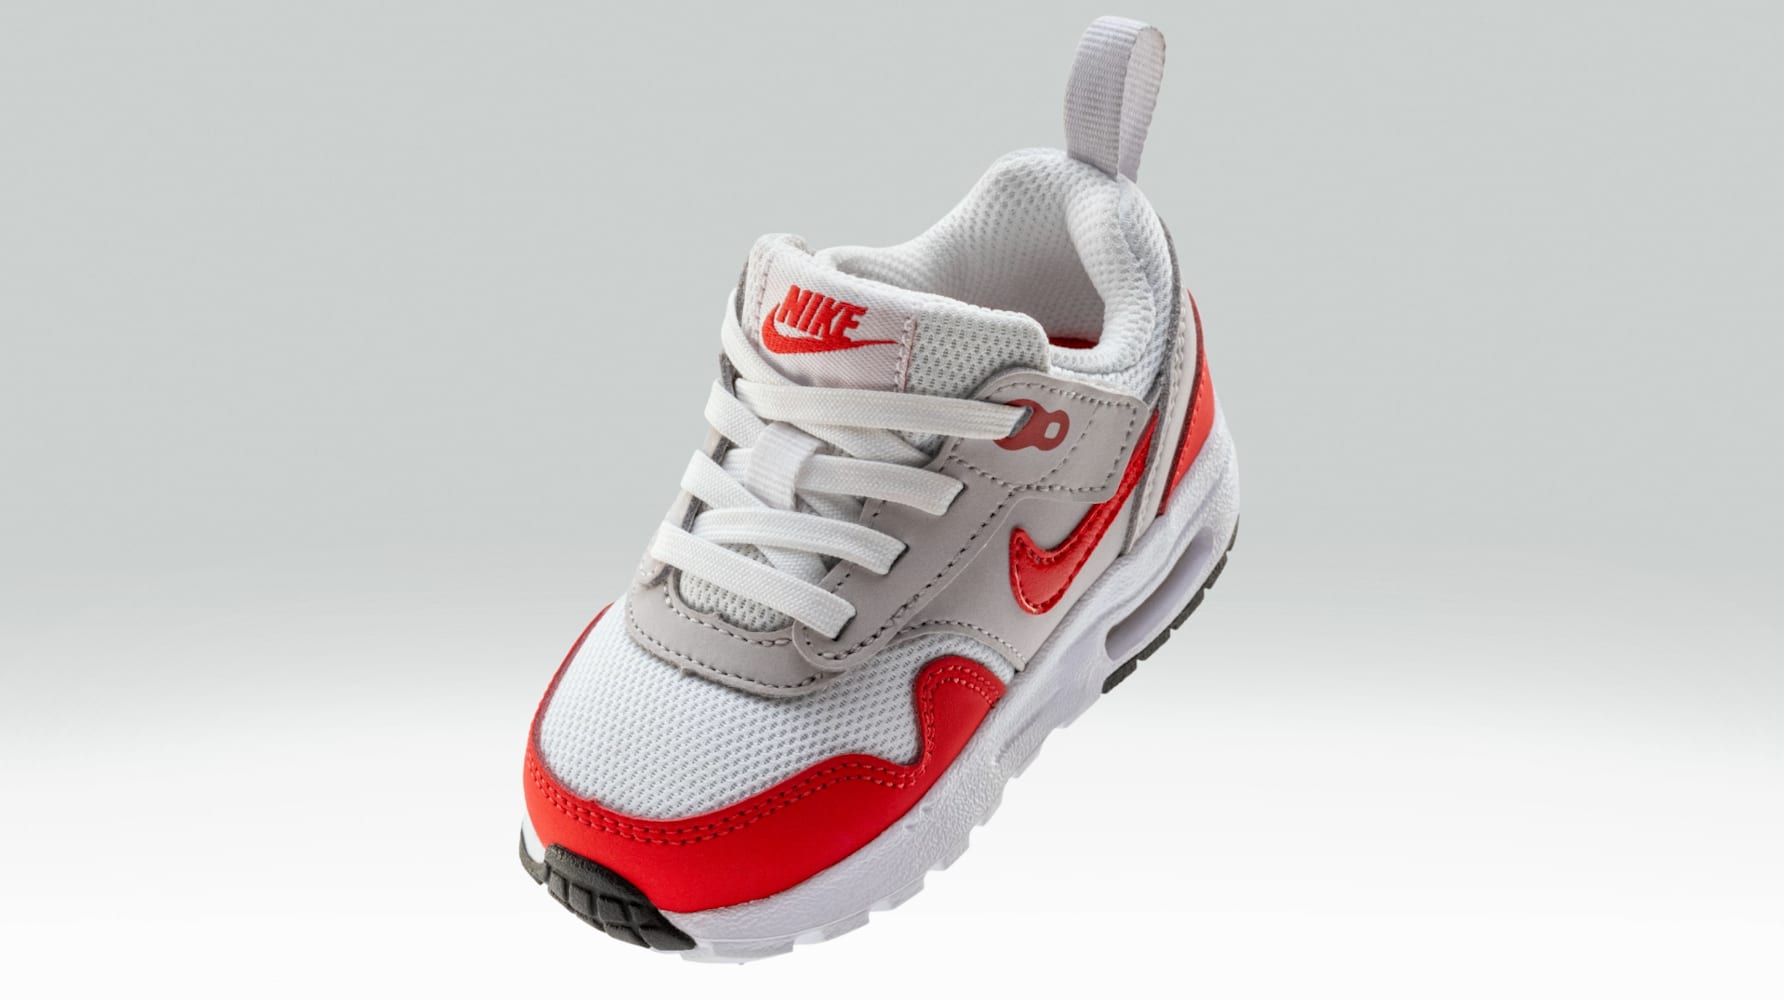 Nike EasyOn – Adaptive Shoes for Every Body.